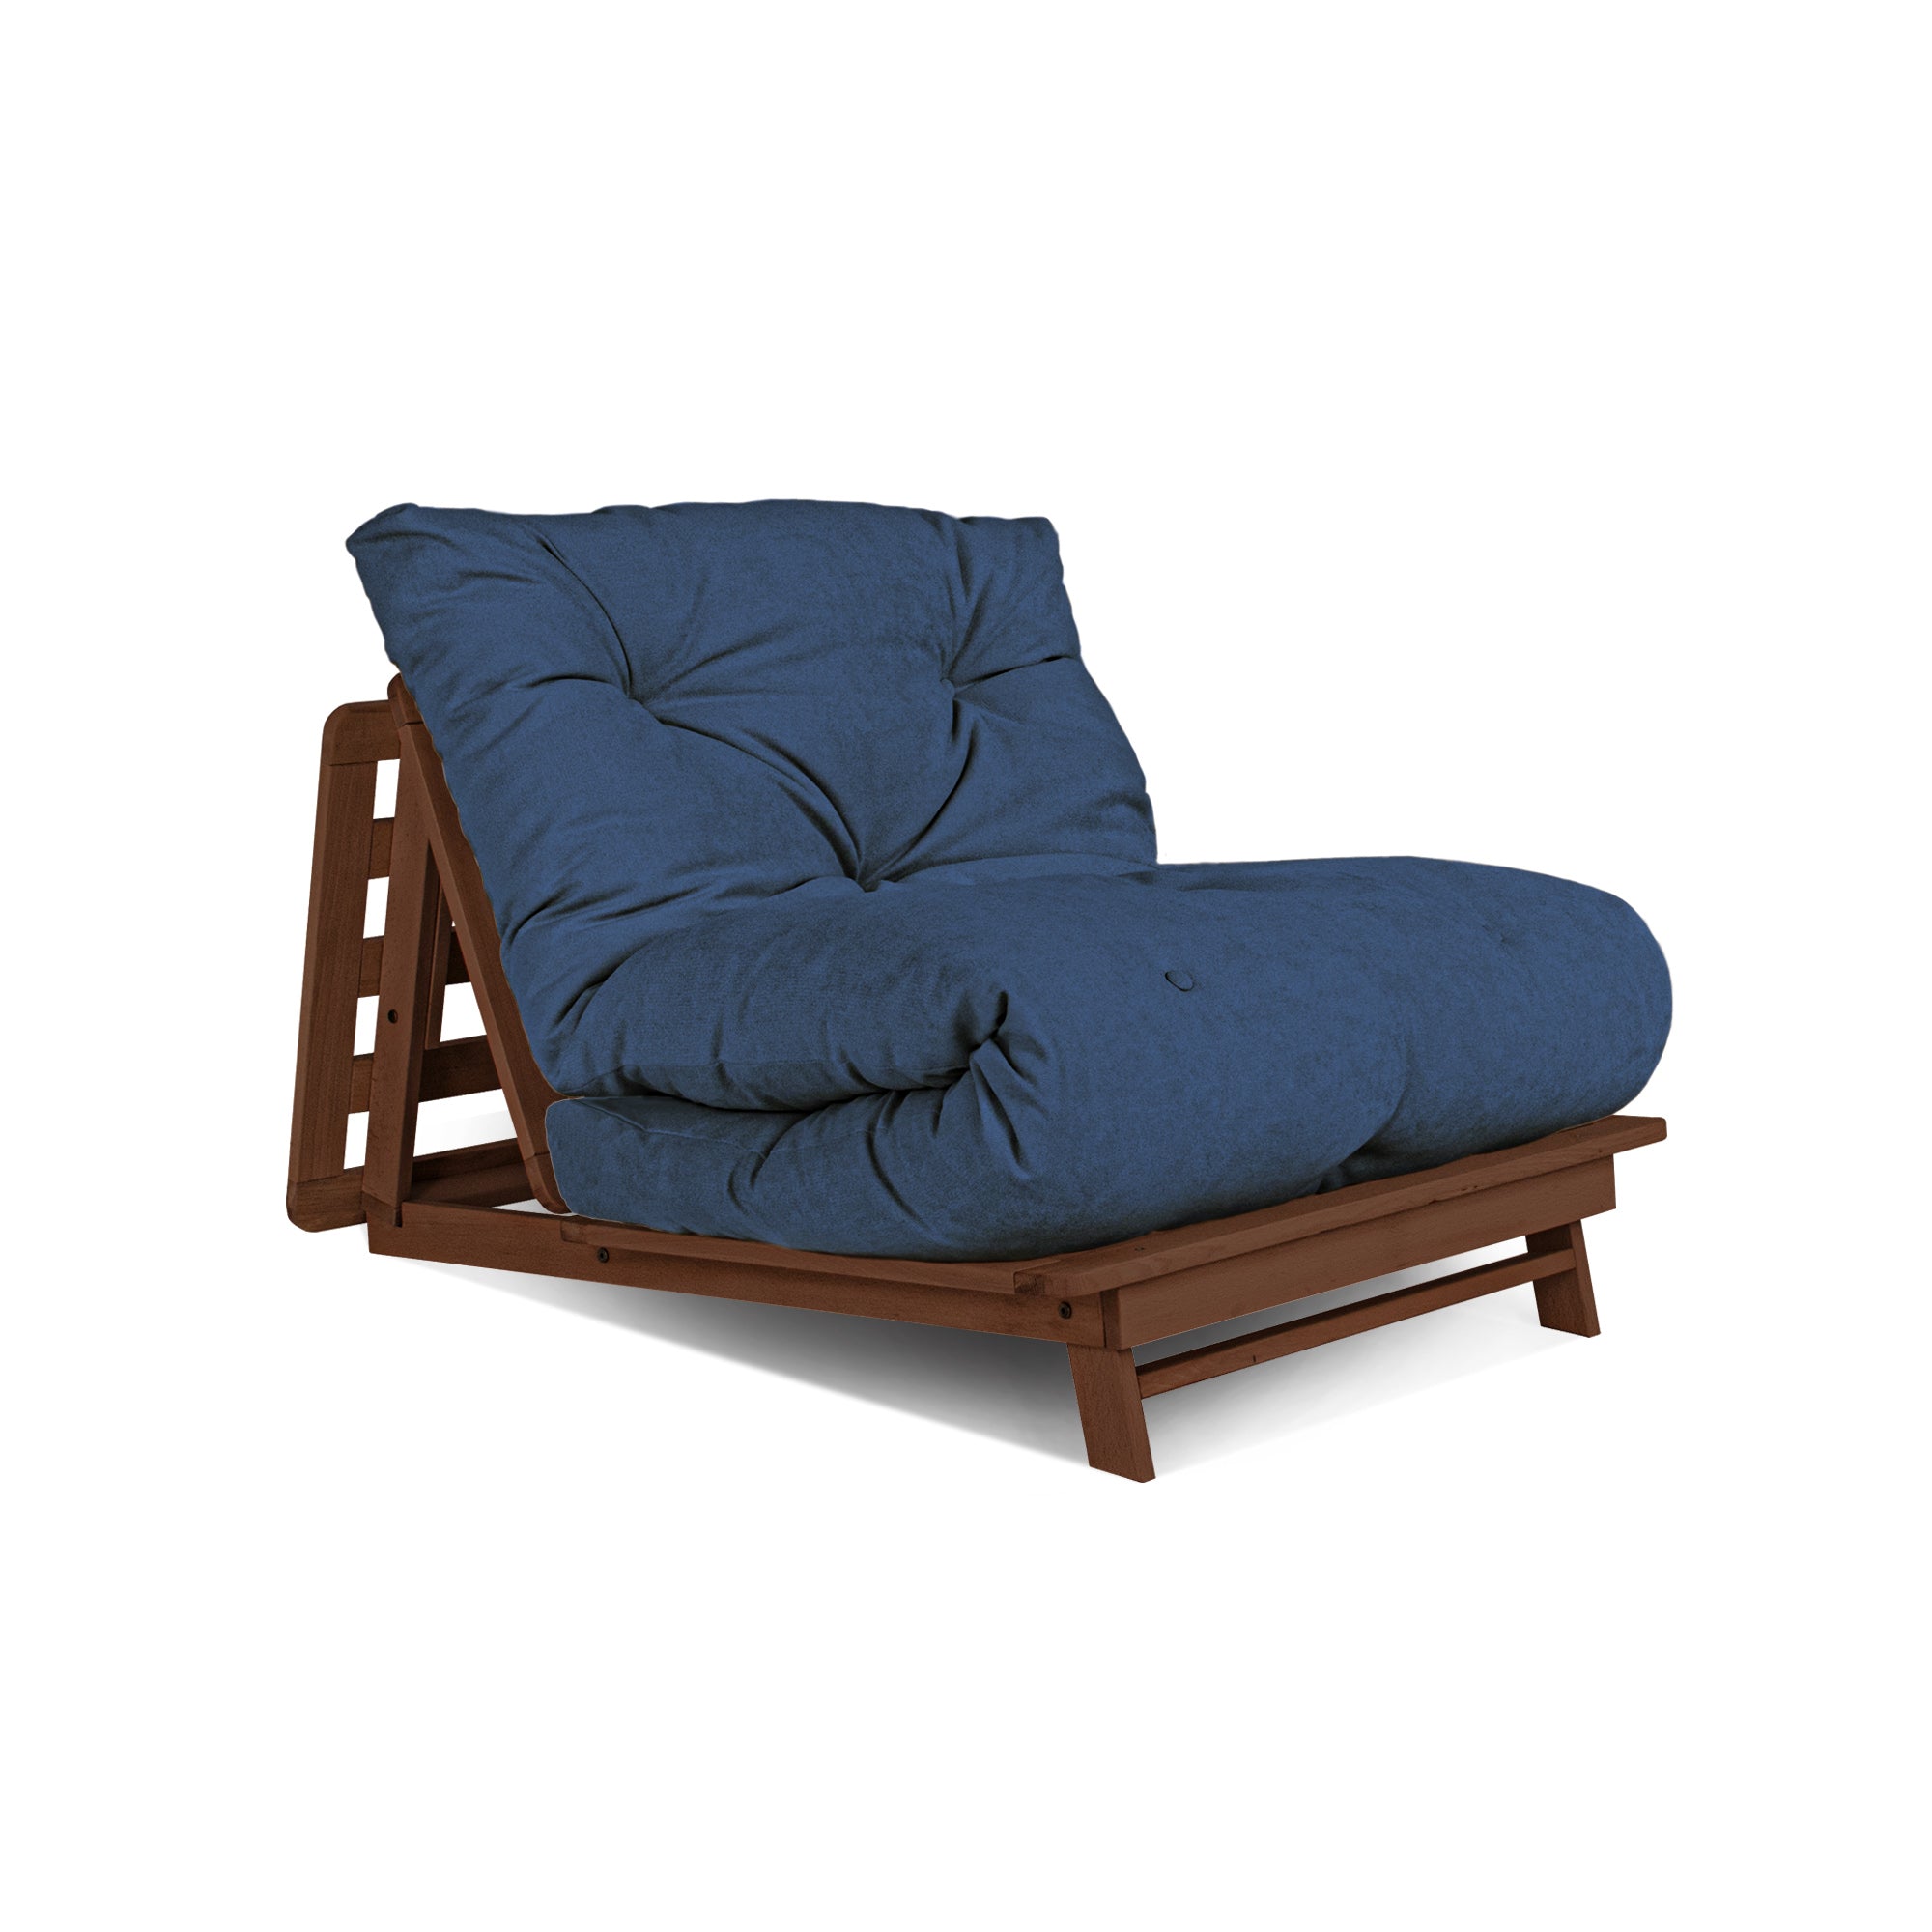 LAYTI-90 Futon Chair-walnut frame-blue fabric